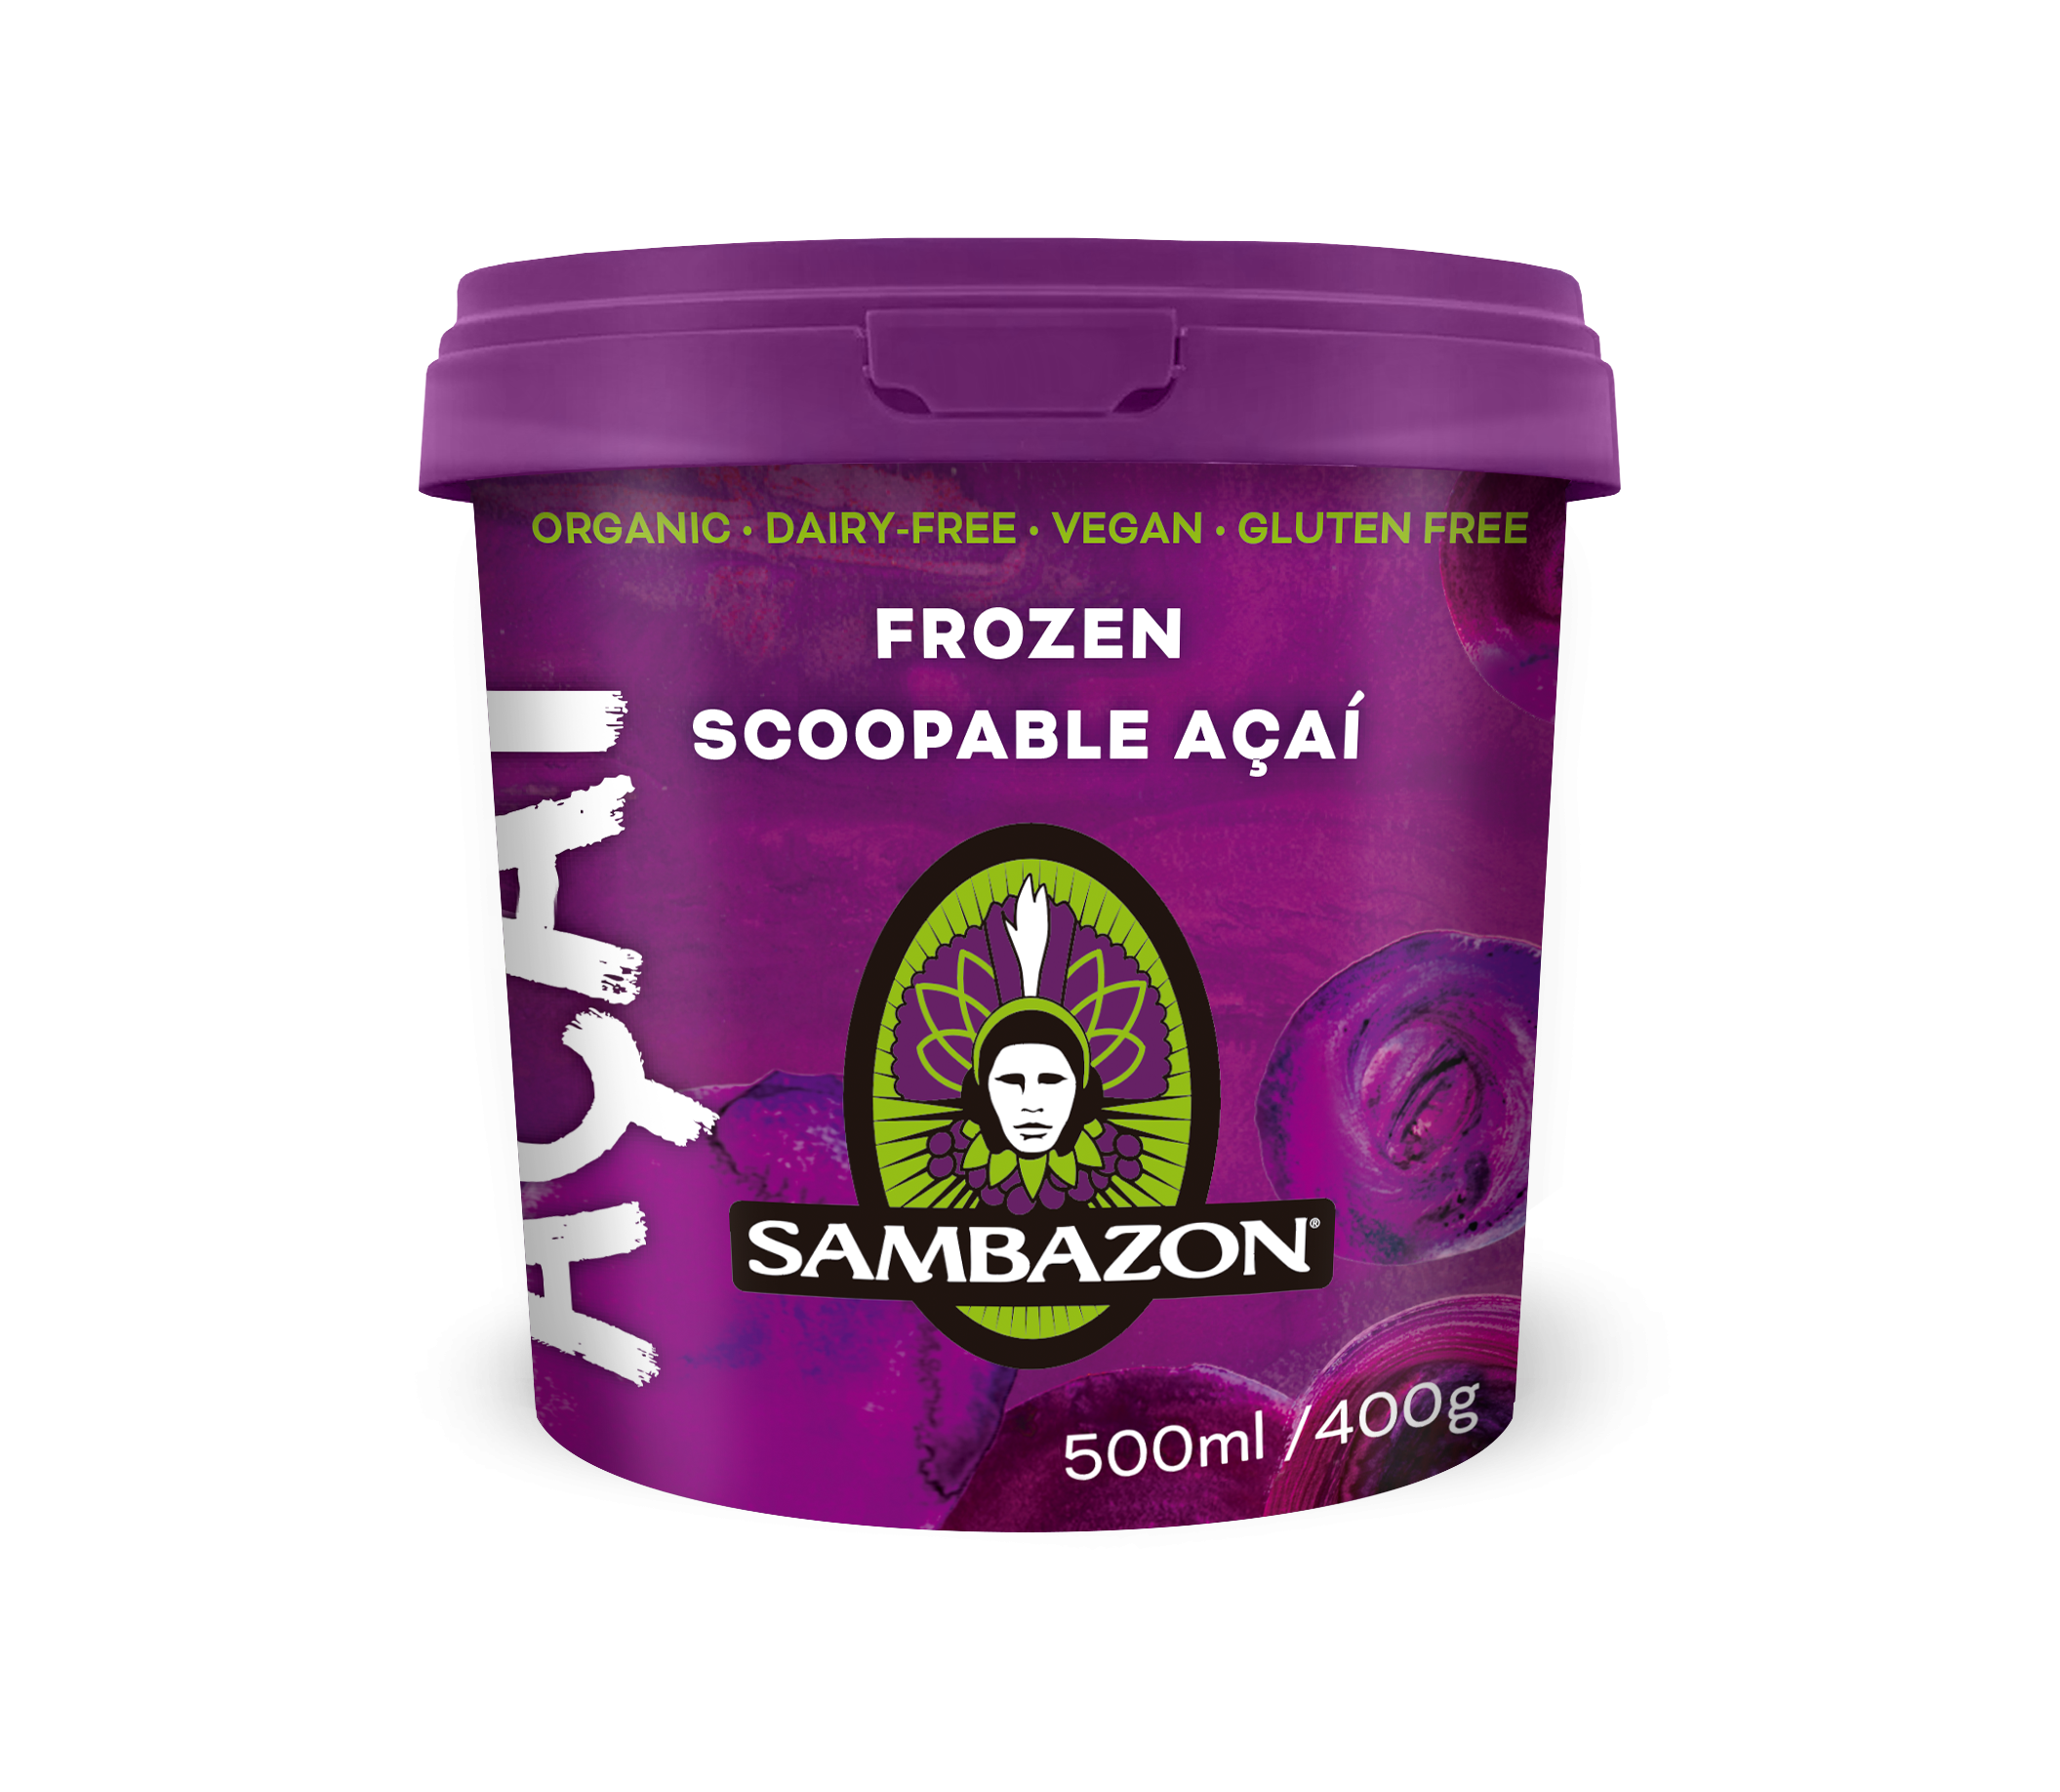 SAMBAZON Organic Frozen Scoopable Acai, 500ml